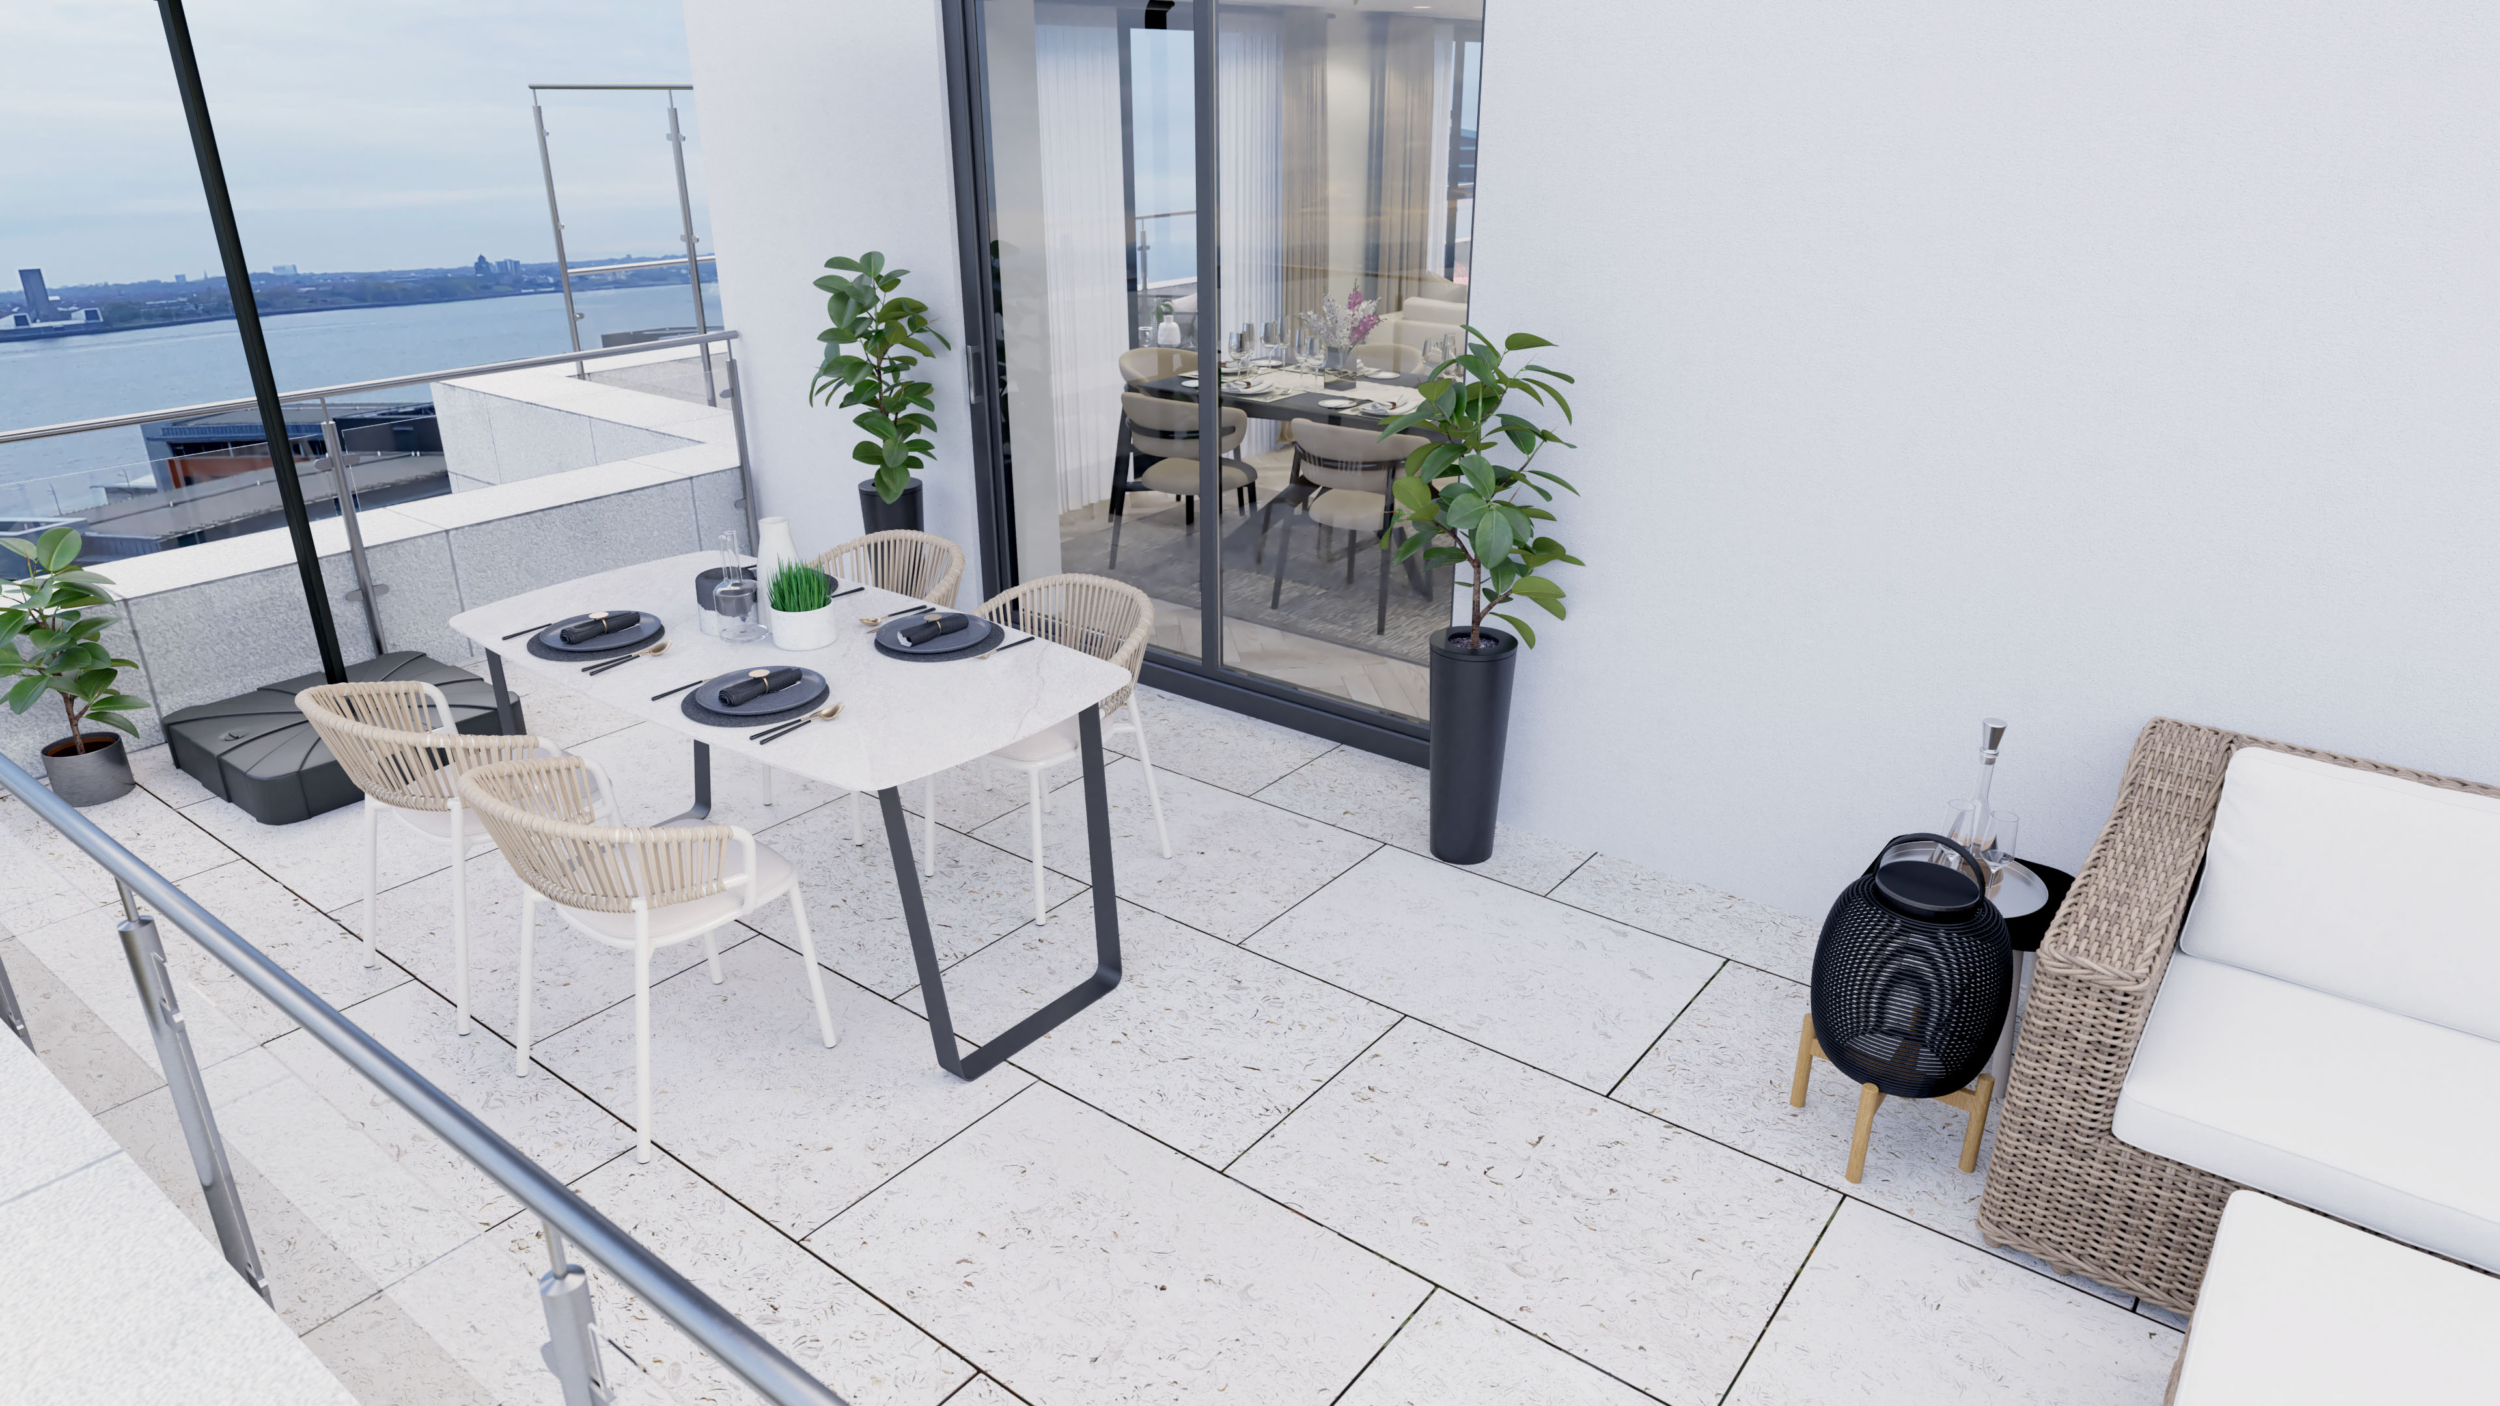 Luxury Penthouse Apartment, Terrace CGI, Linear CGI Studio